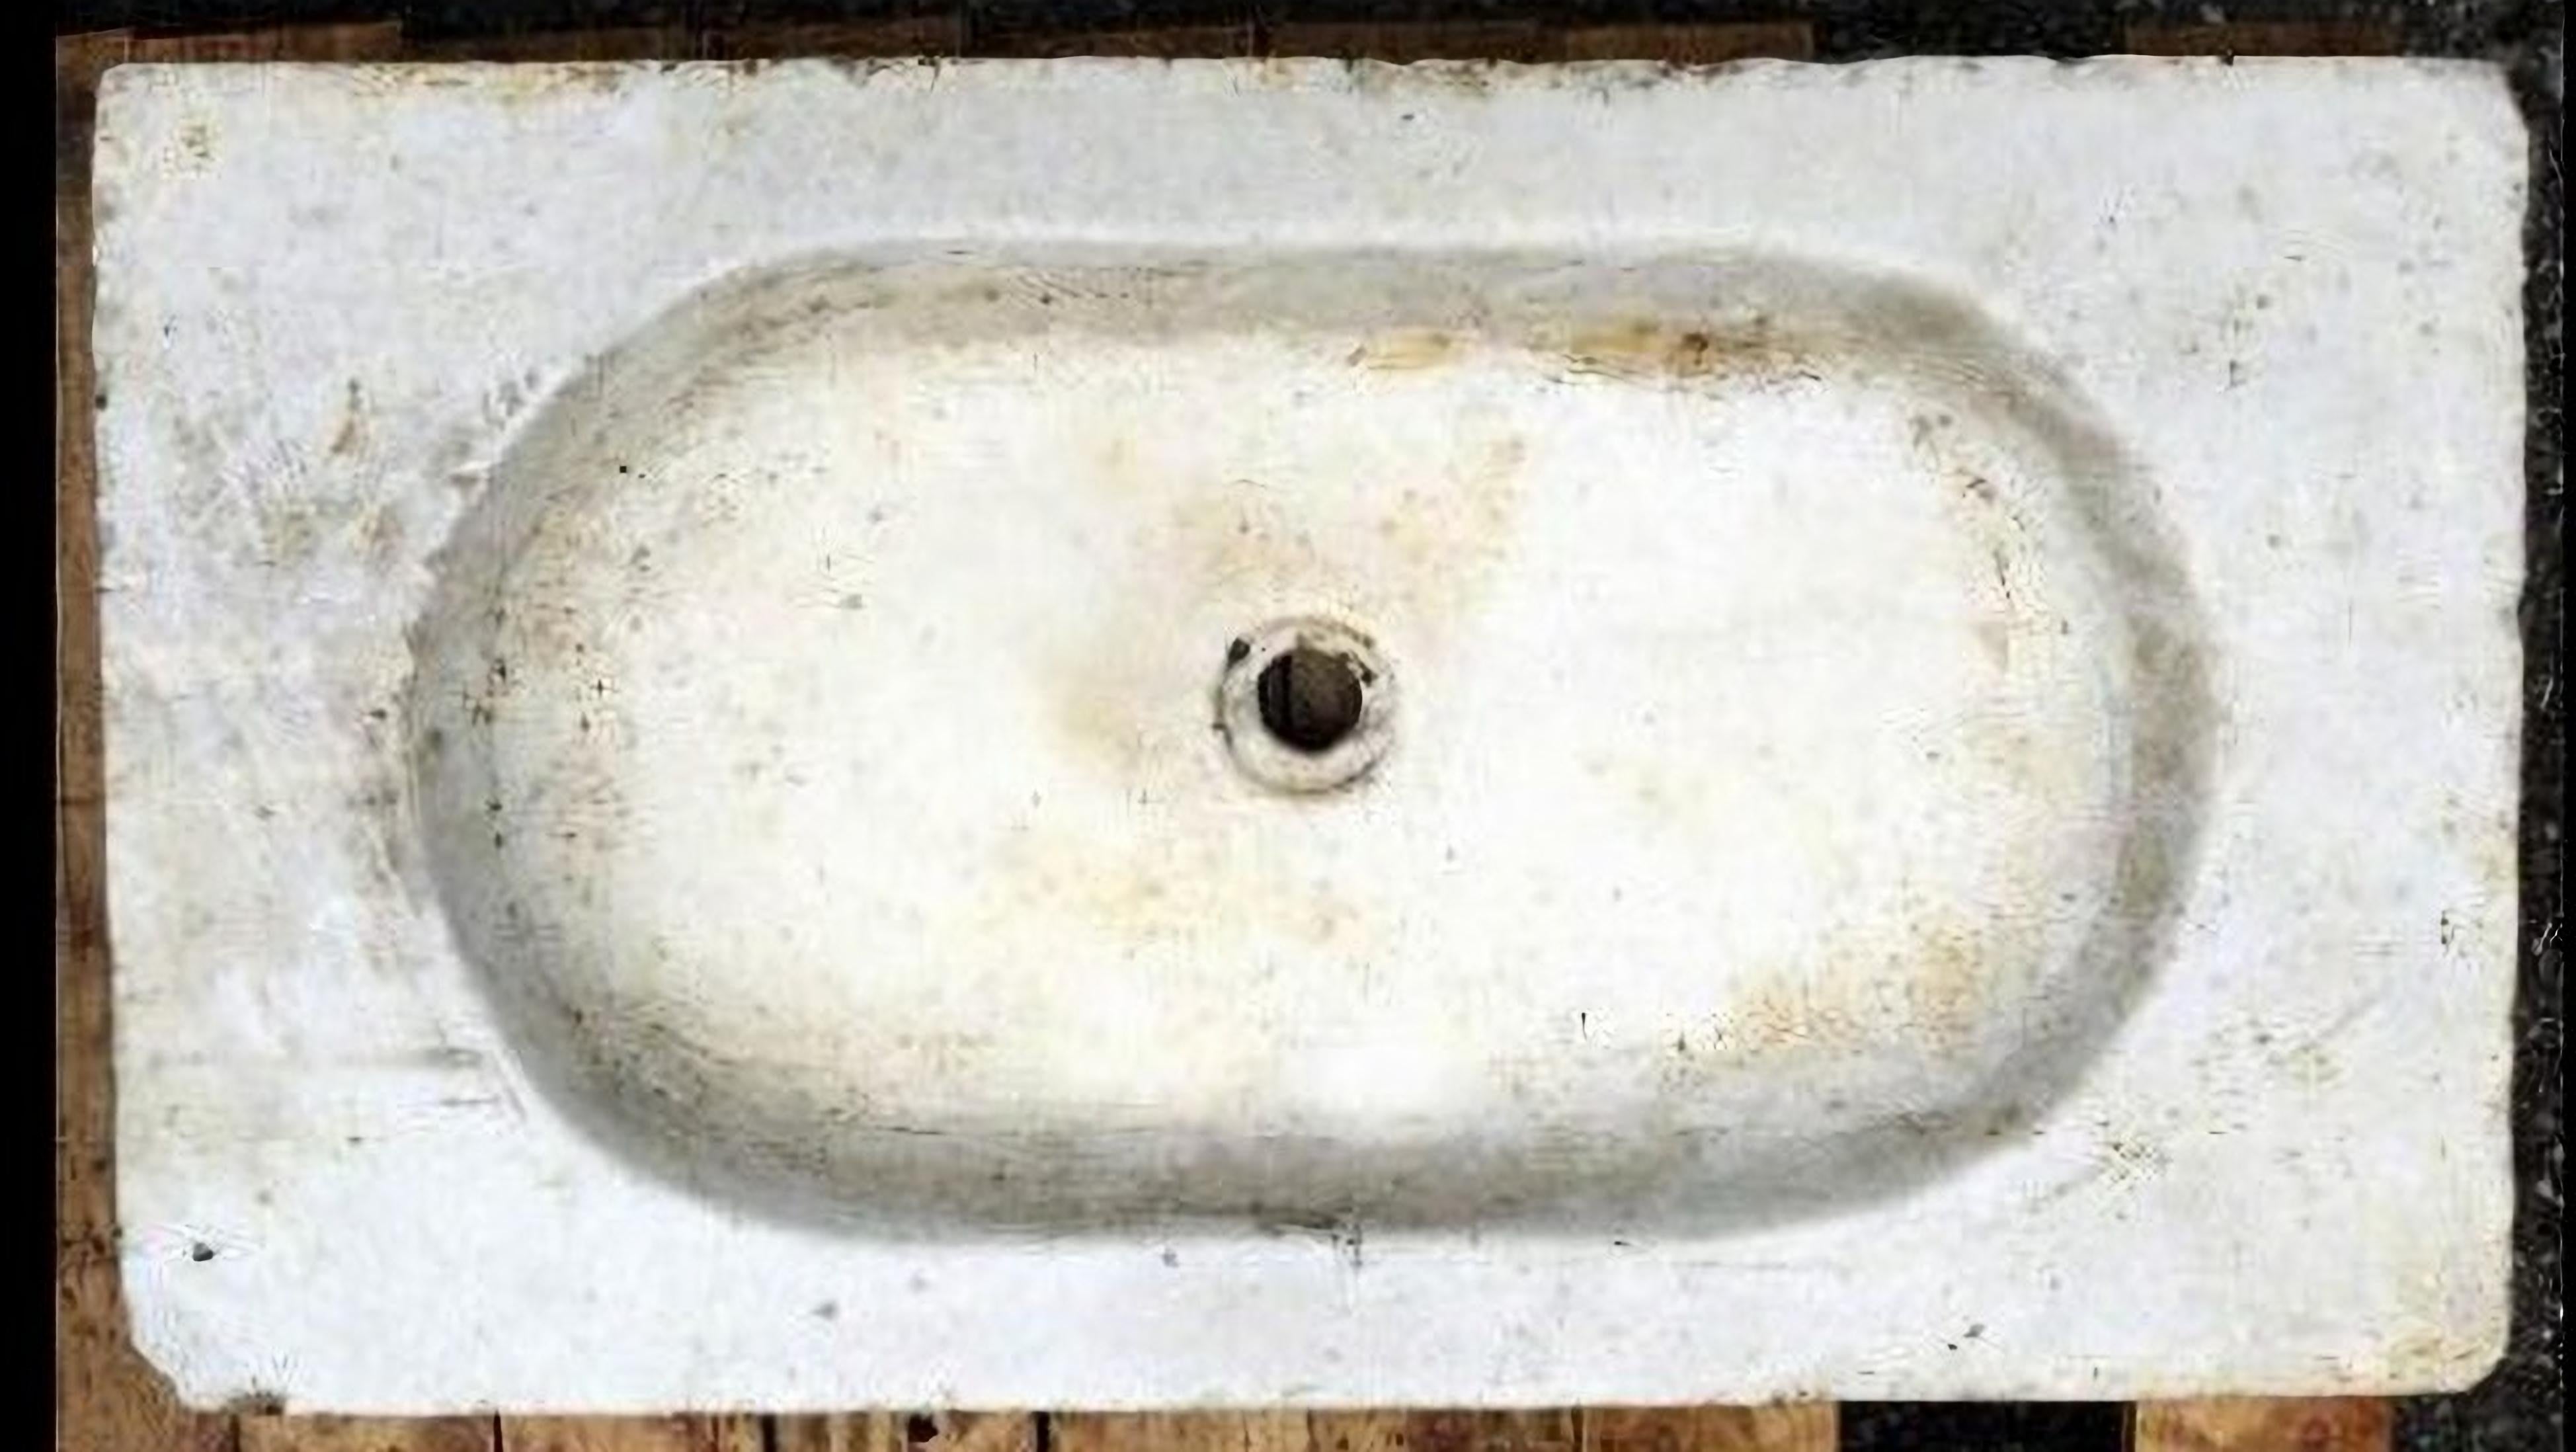 ANTIQUE ORIGINAL ITALIAN CARRARA MARBLE SINK began 20th Century
Italy
Original antique white marble sink.
Soundhole dimensions: 42cm x 33cm x 4cm.
original condition
WIDTH 57 cm
LENGTH 32 cm
THICKNESS 8 cm
